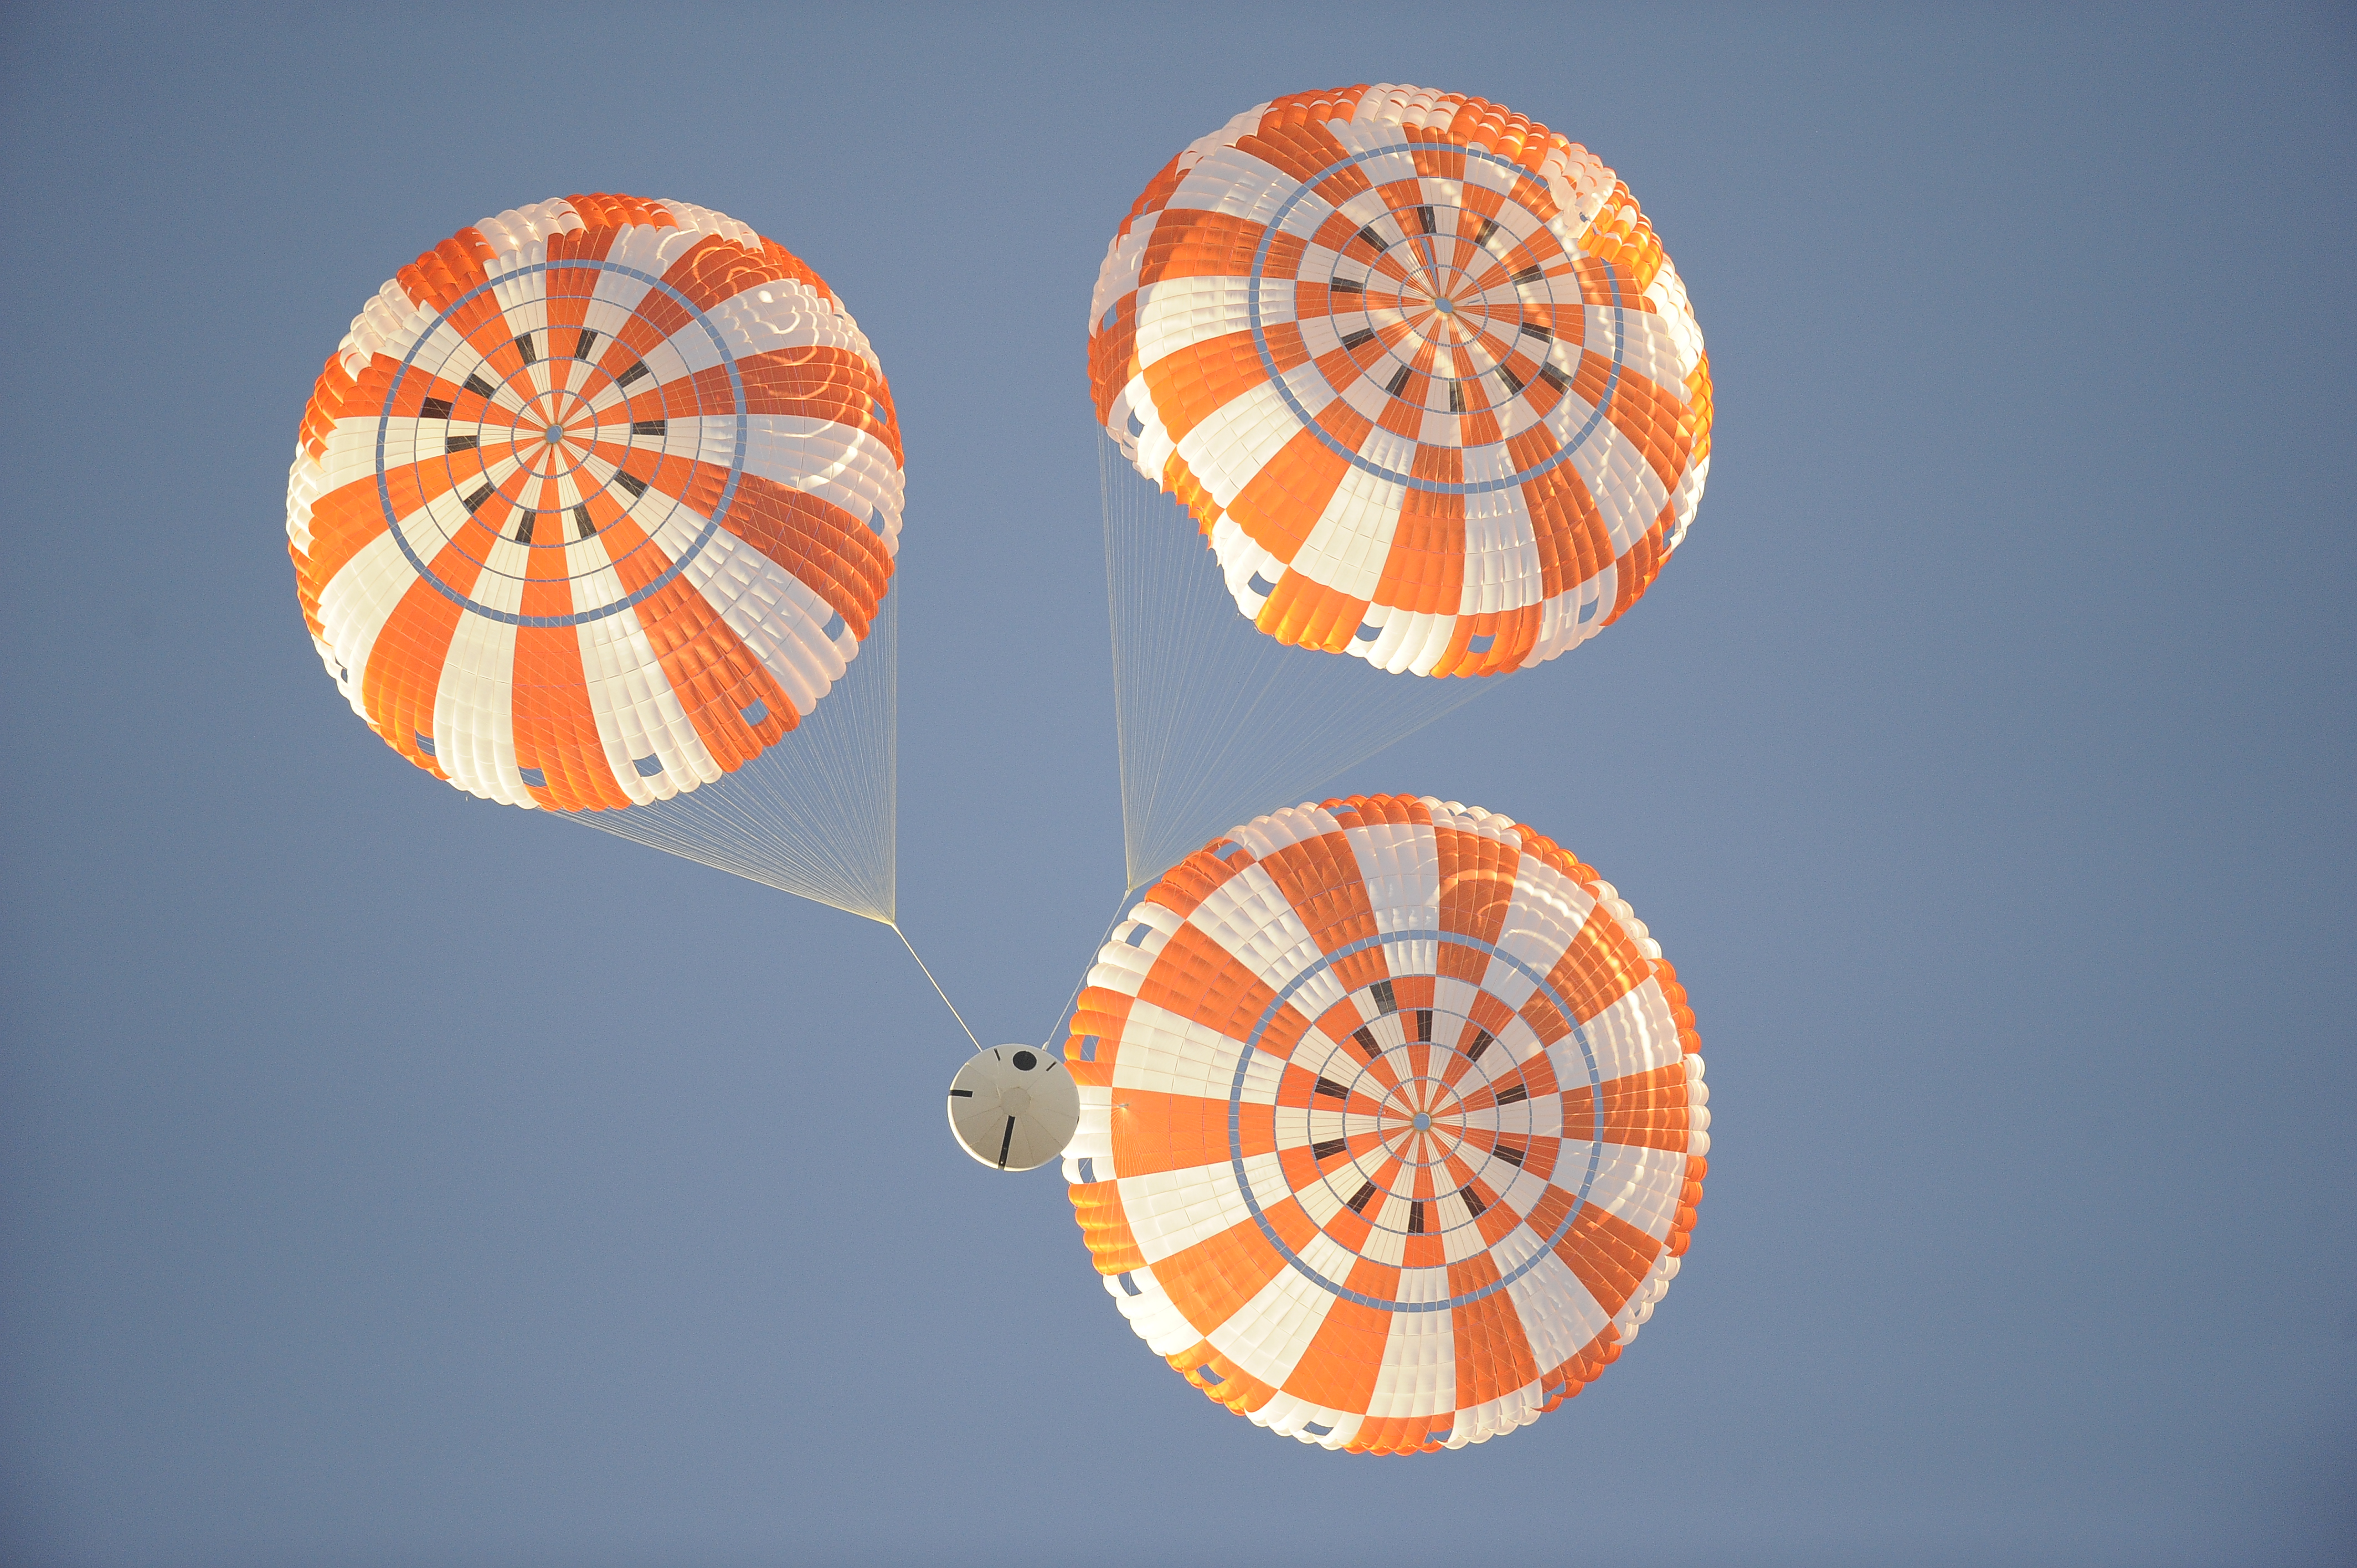 three parachutes visible above spacecraft